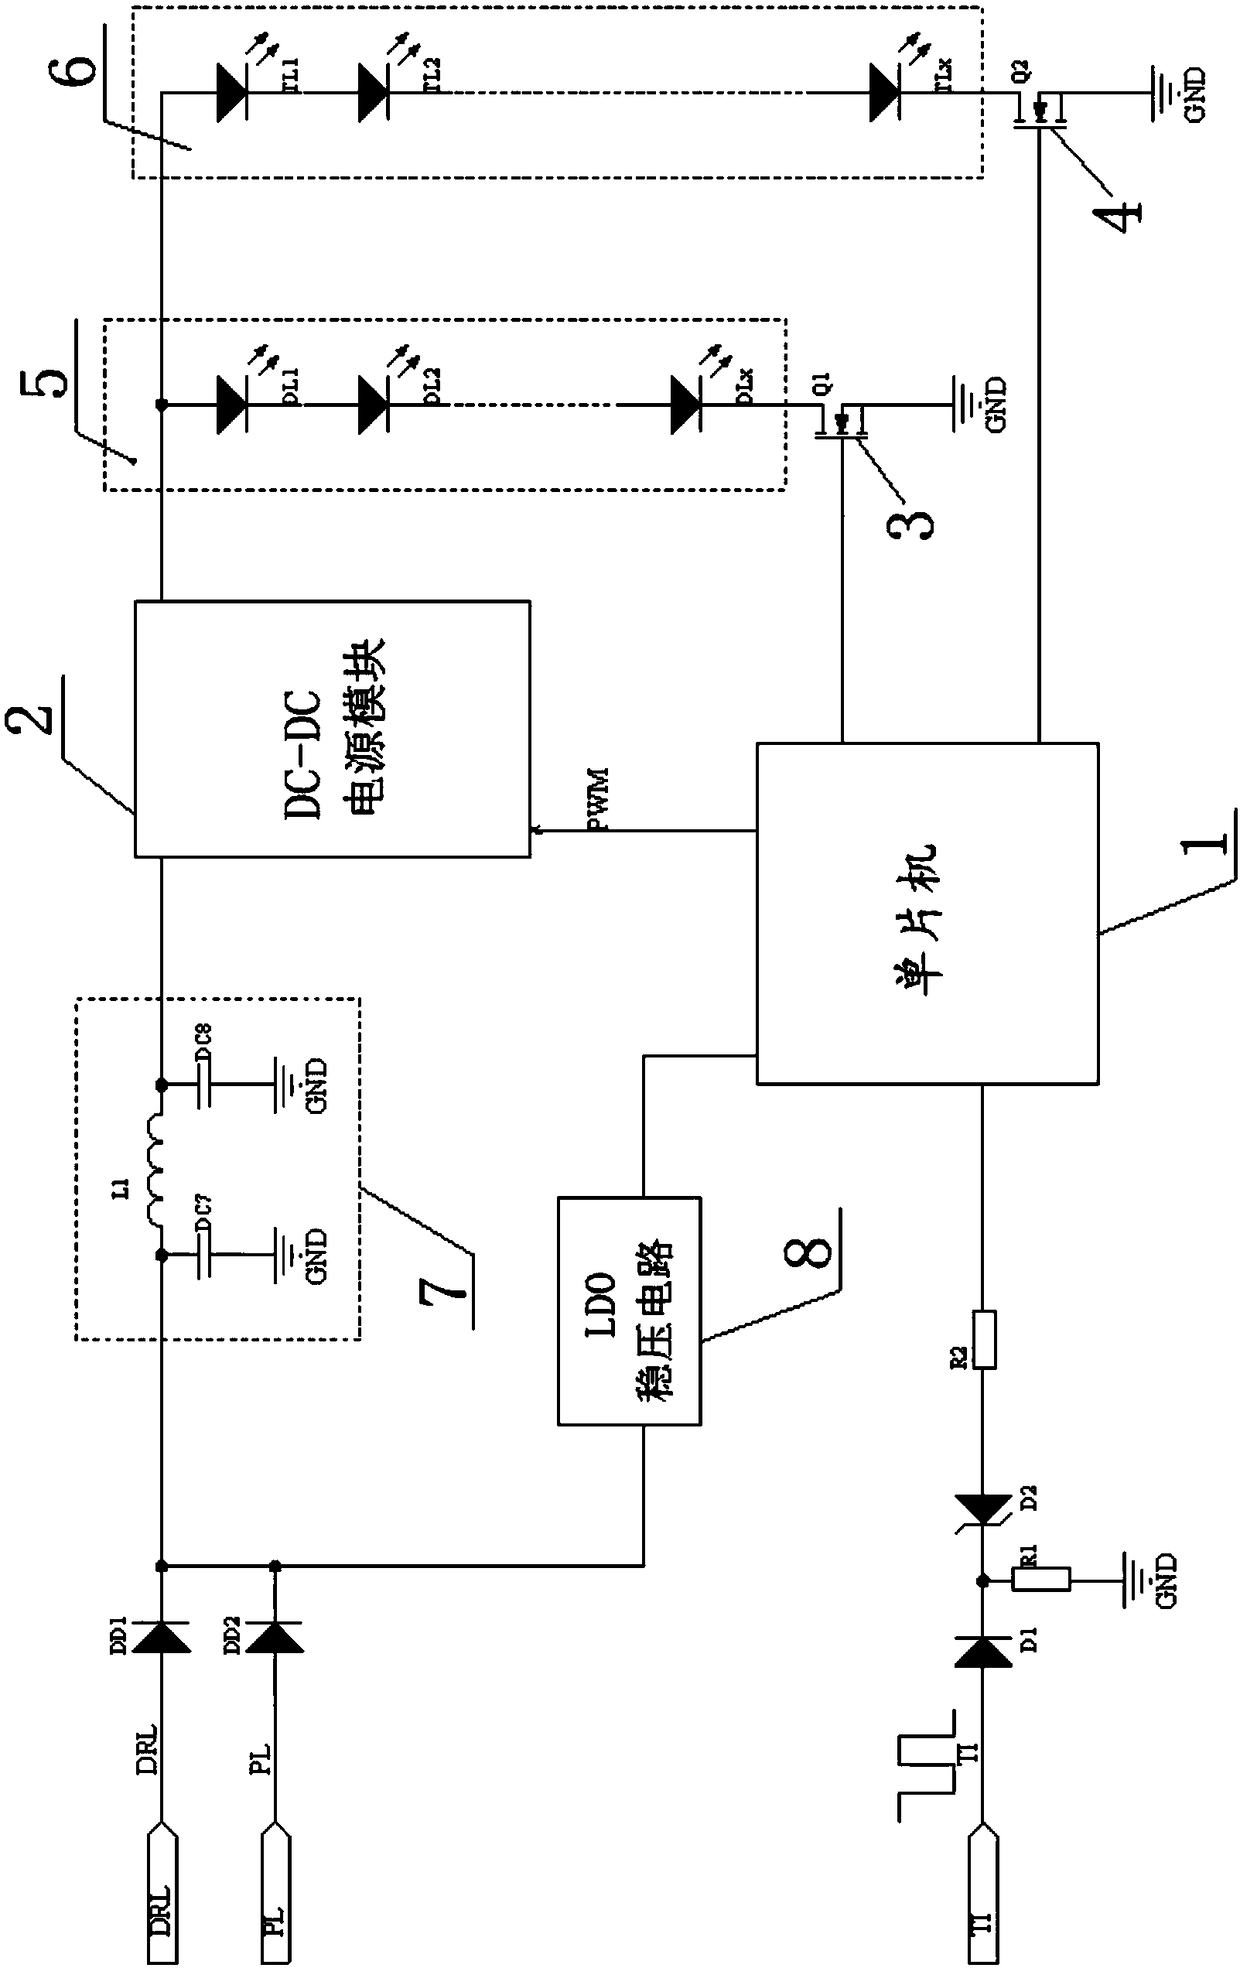 Switching power supply drive circuit of daytime running light and turn light